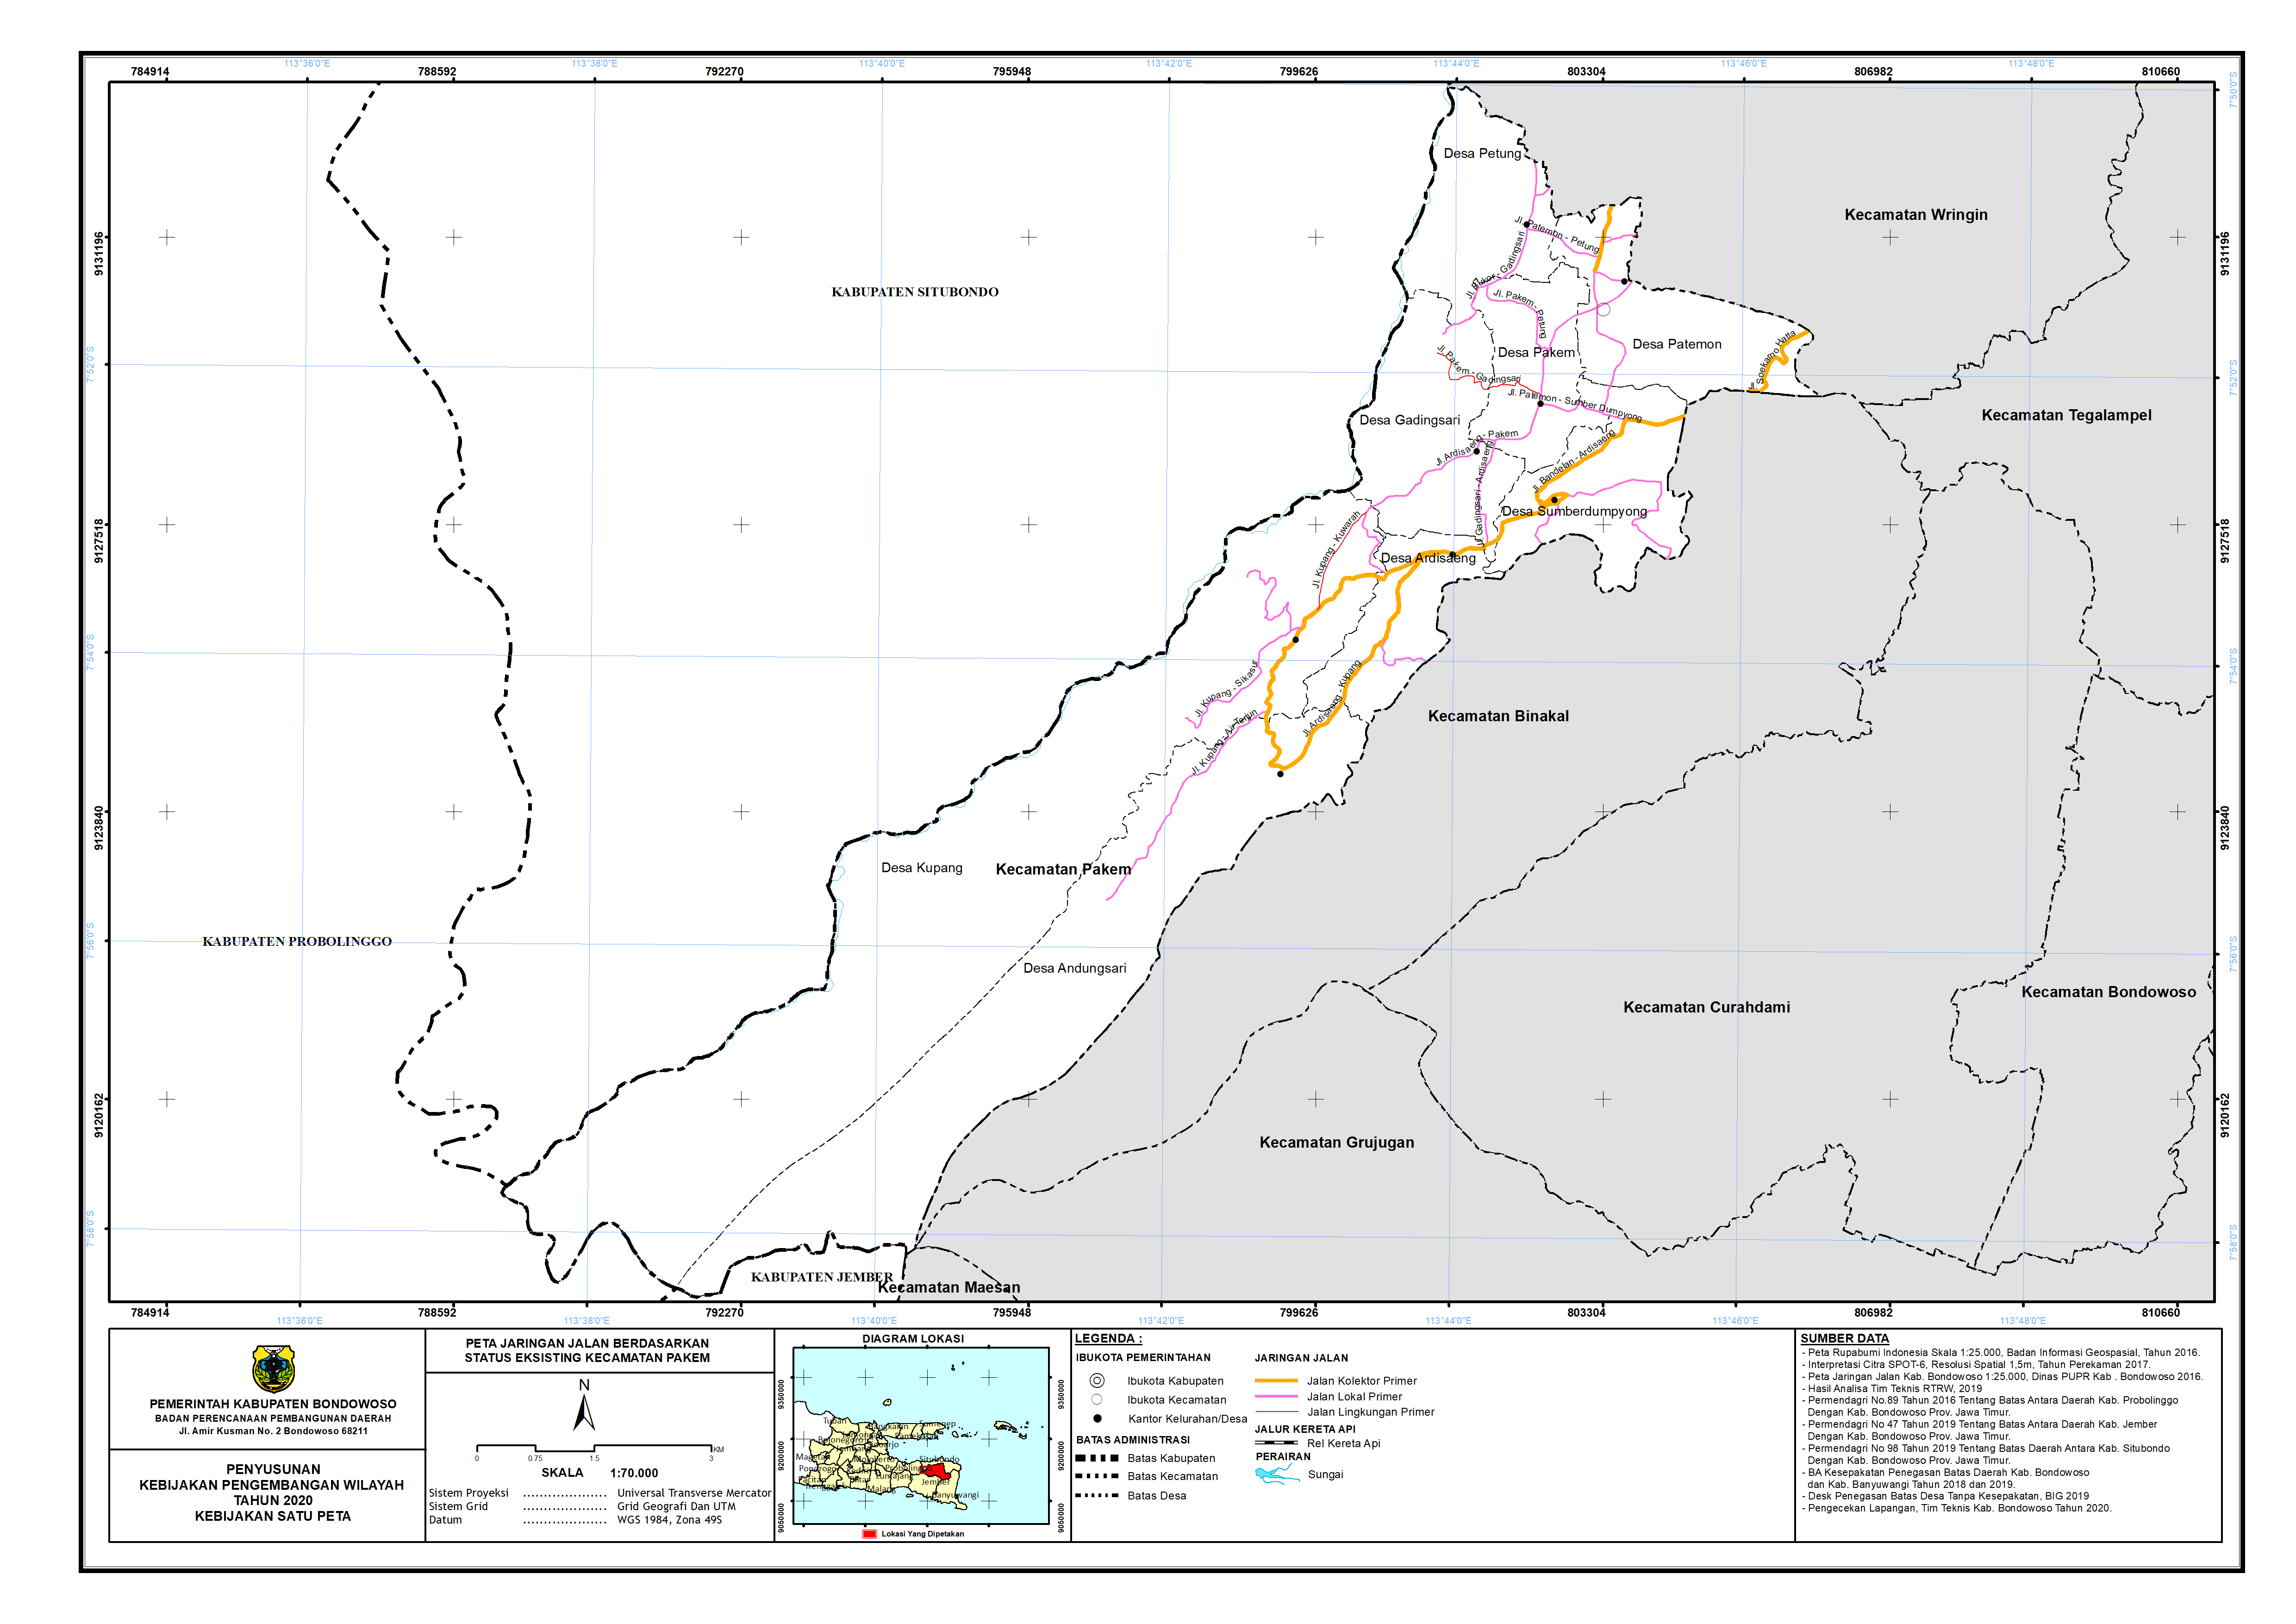 Peta Jaringan Jalan Berdasarkan Status Eksisting Kecamatan Pakem.png